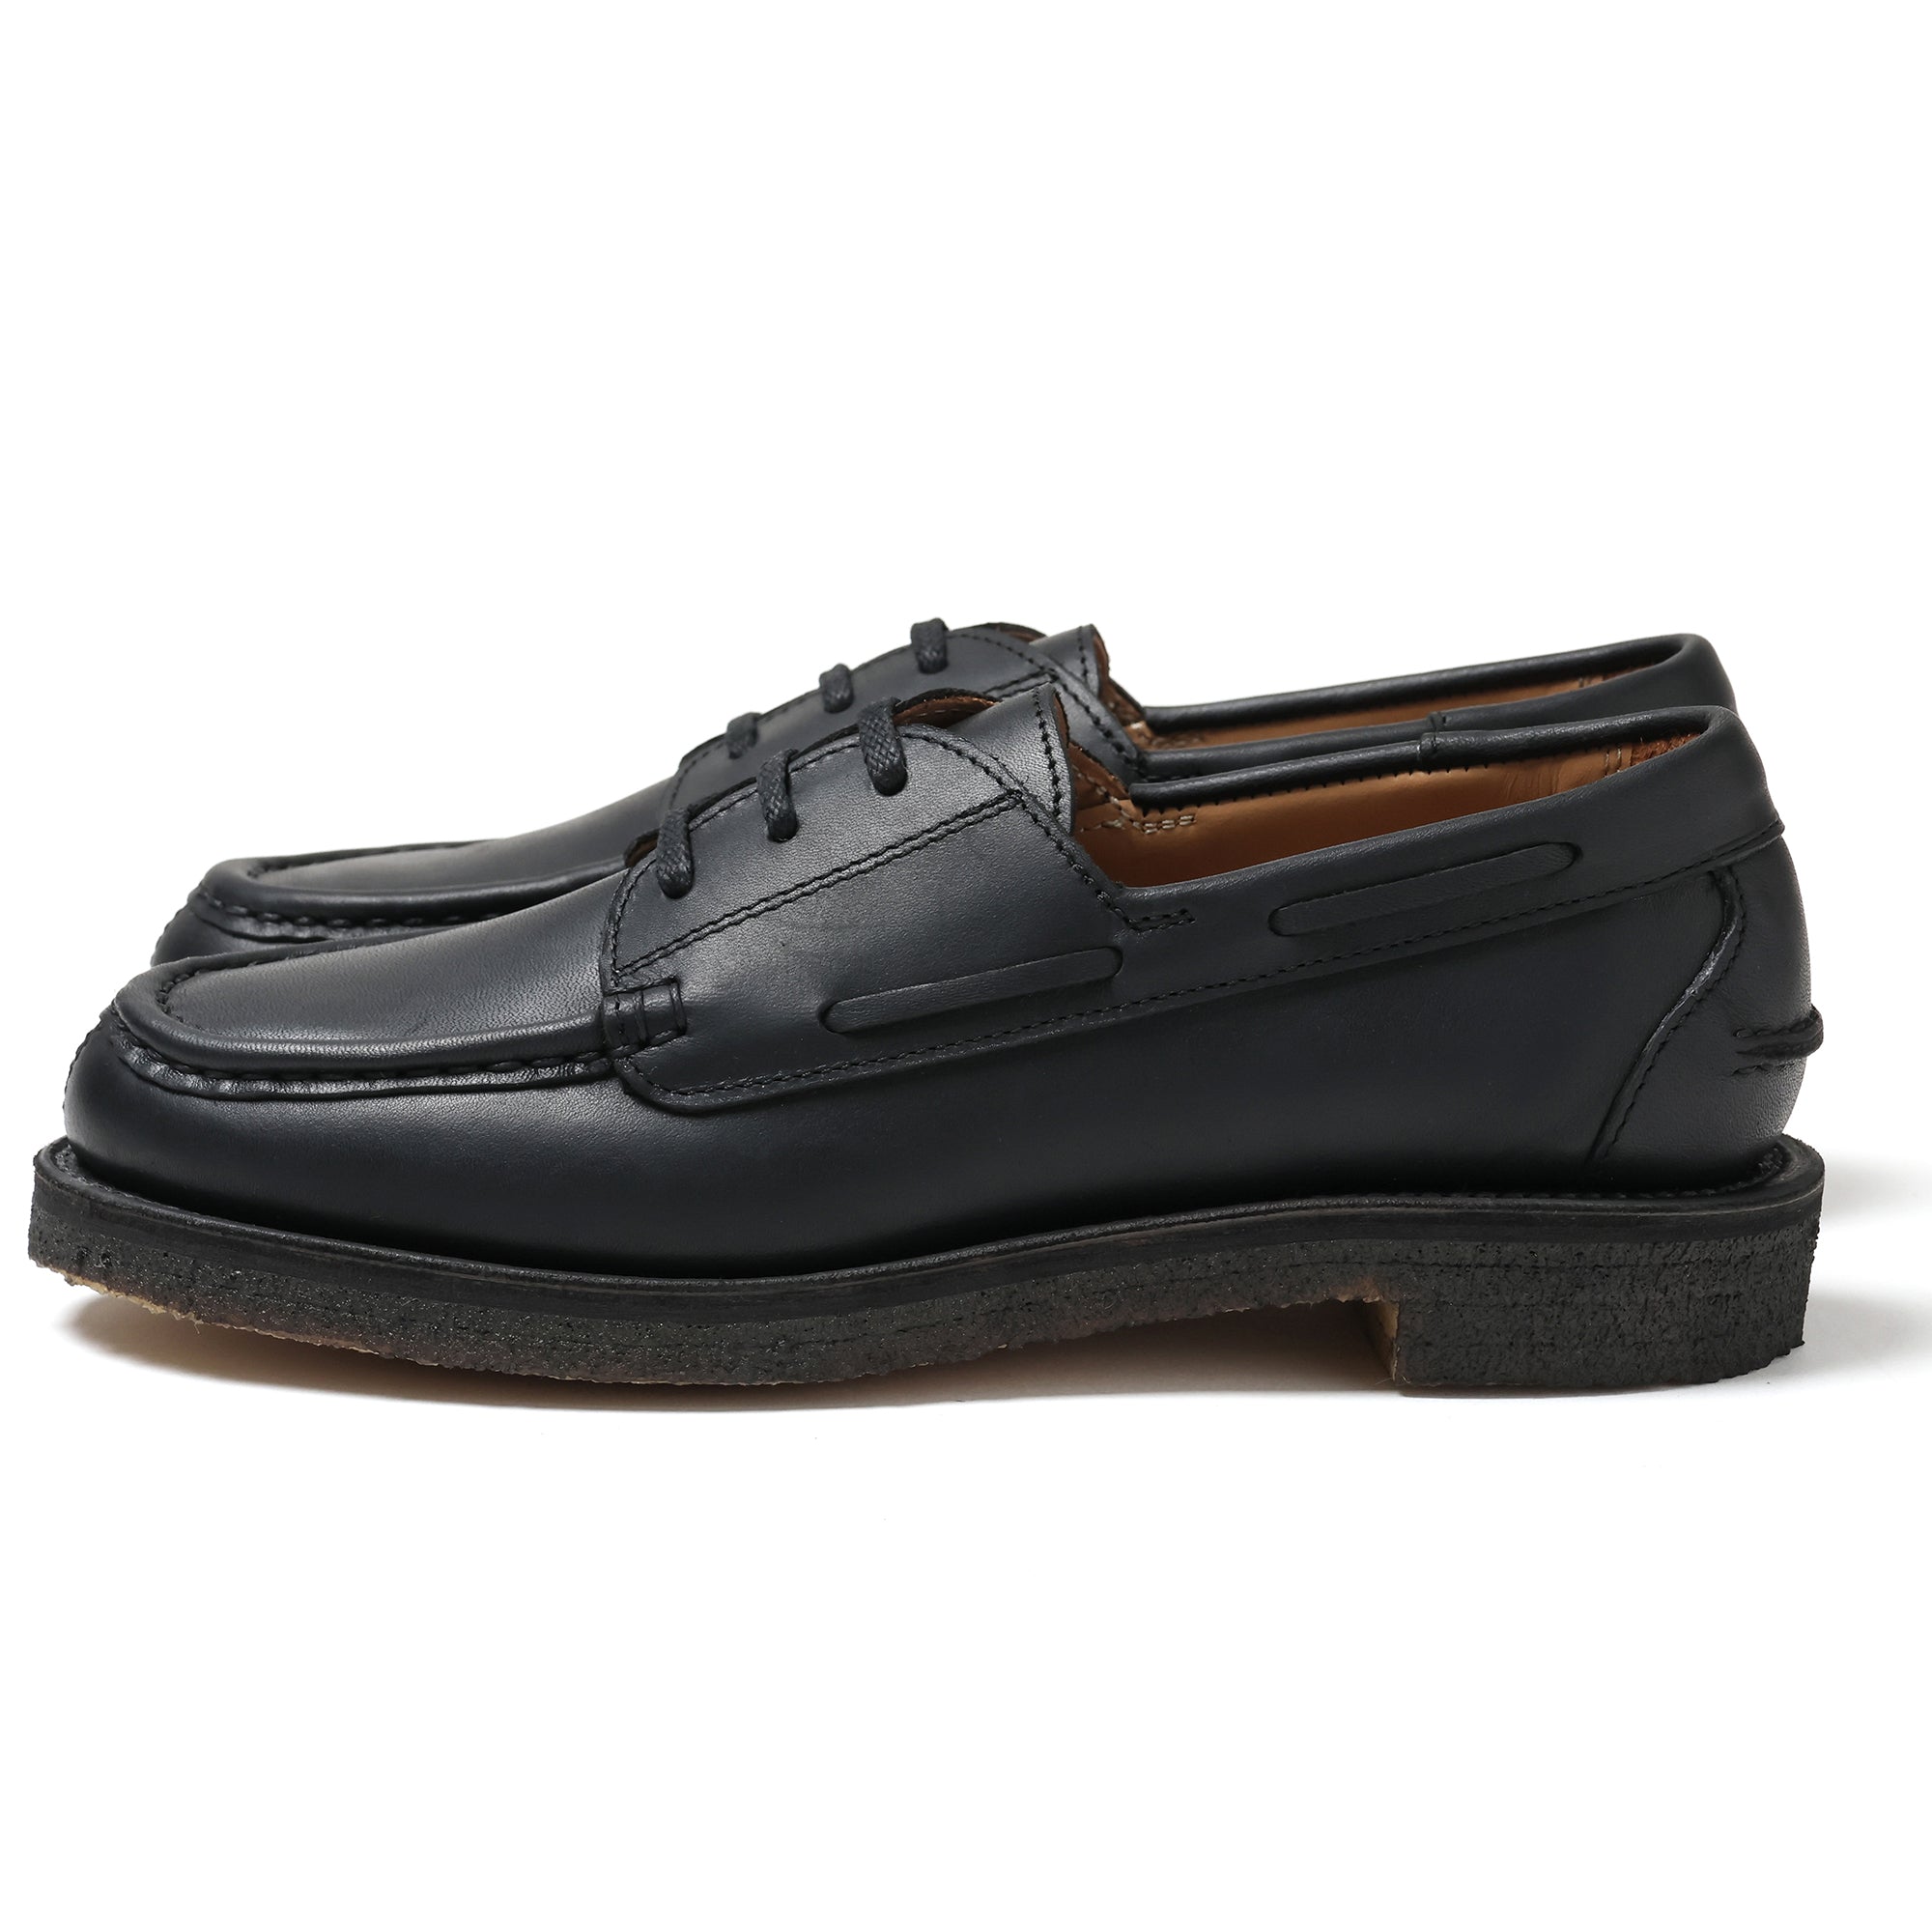 Preti - Black/Jacquard | Regal lace-up boot | Fluevog Shoes